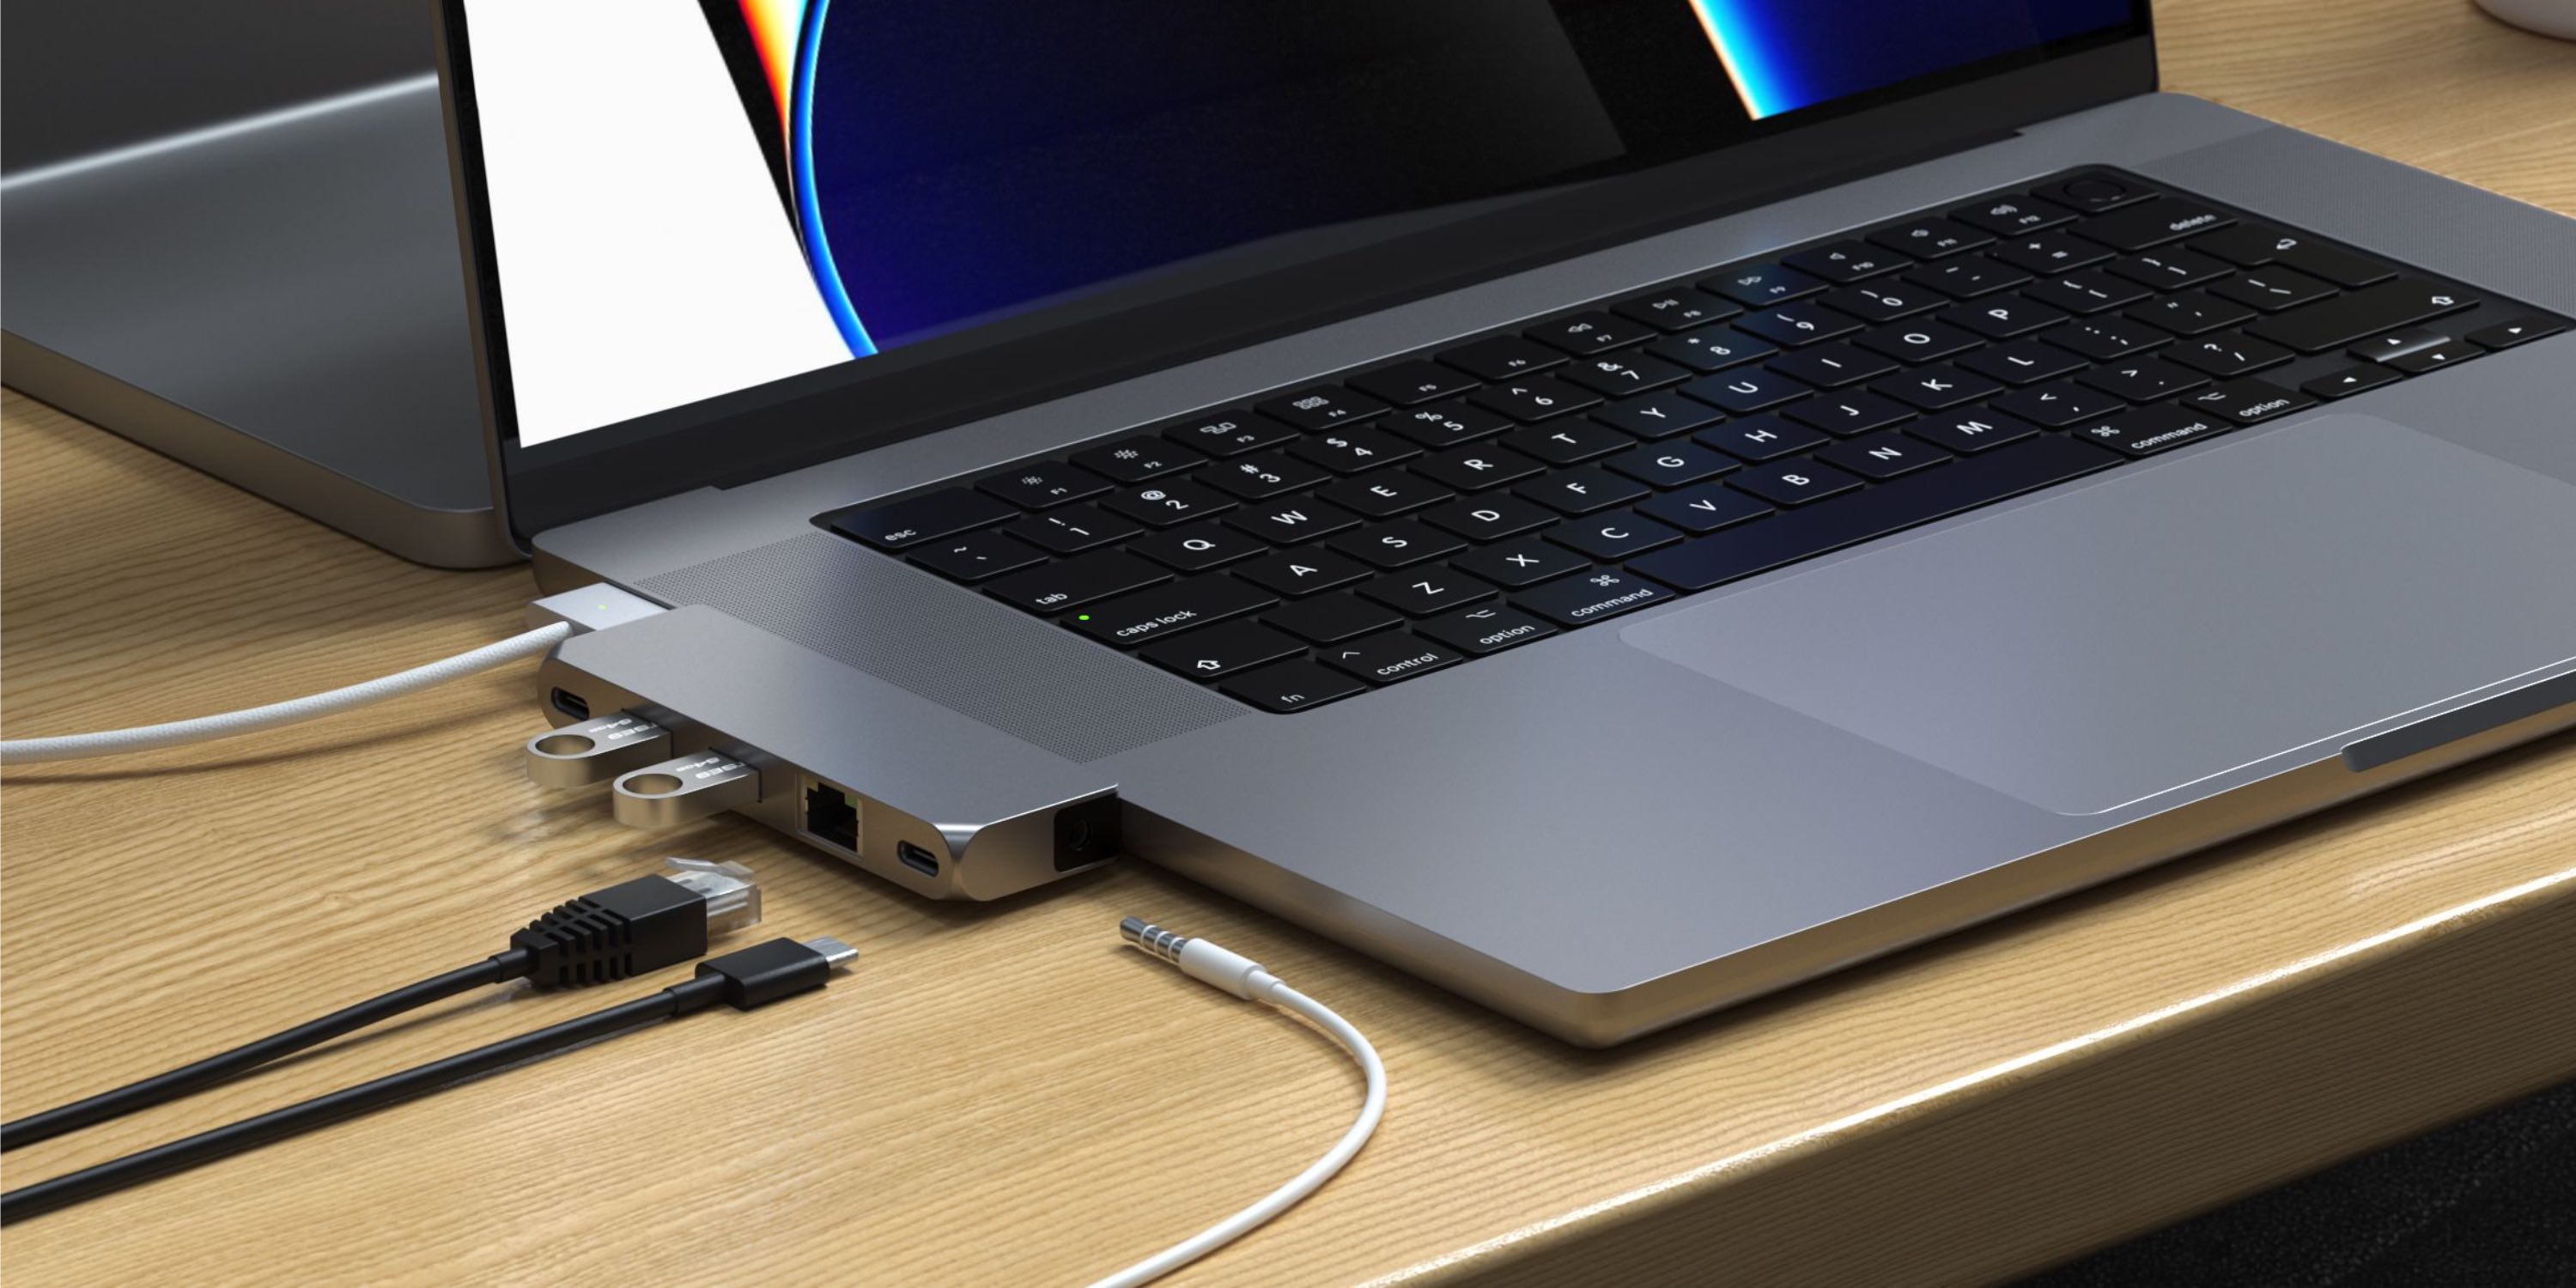 Satechi Pro Hub Mini brings more ports to MacBook Pro - 9to5Mac